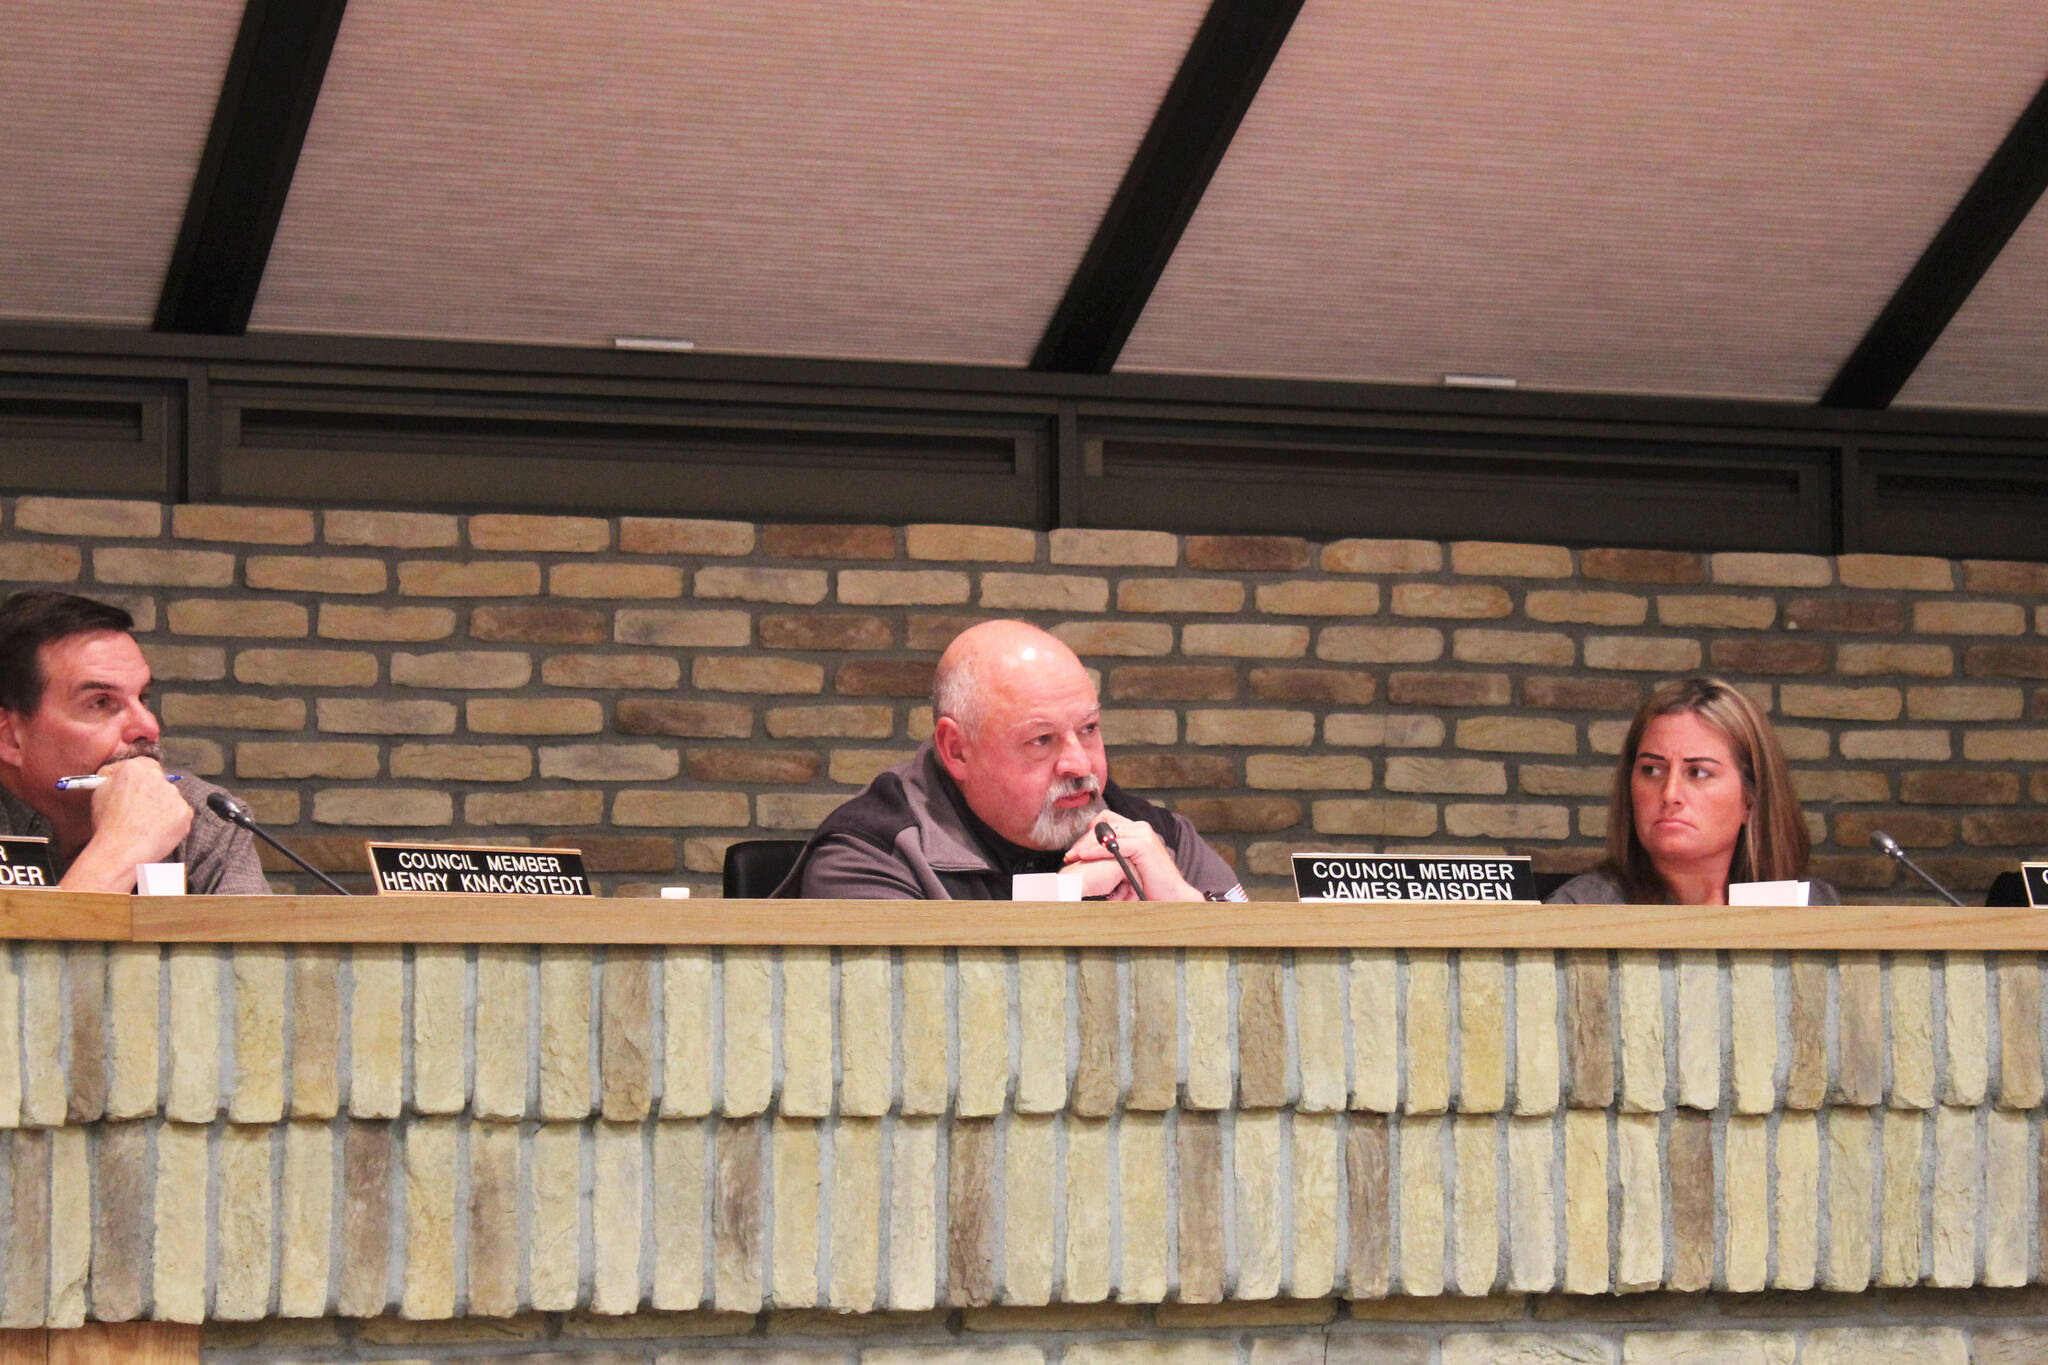 Kenai City Council member James Baisden speaks in support of legislation opposing government COVID-19 mandates during a meeting of the Kenai City Council on Wednesday, Dec. 1, 2021 in Kenai, Alaska. (Ashlyn O’Hara/Peninsula Clarion)